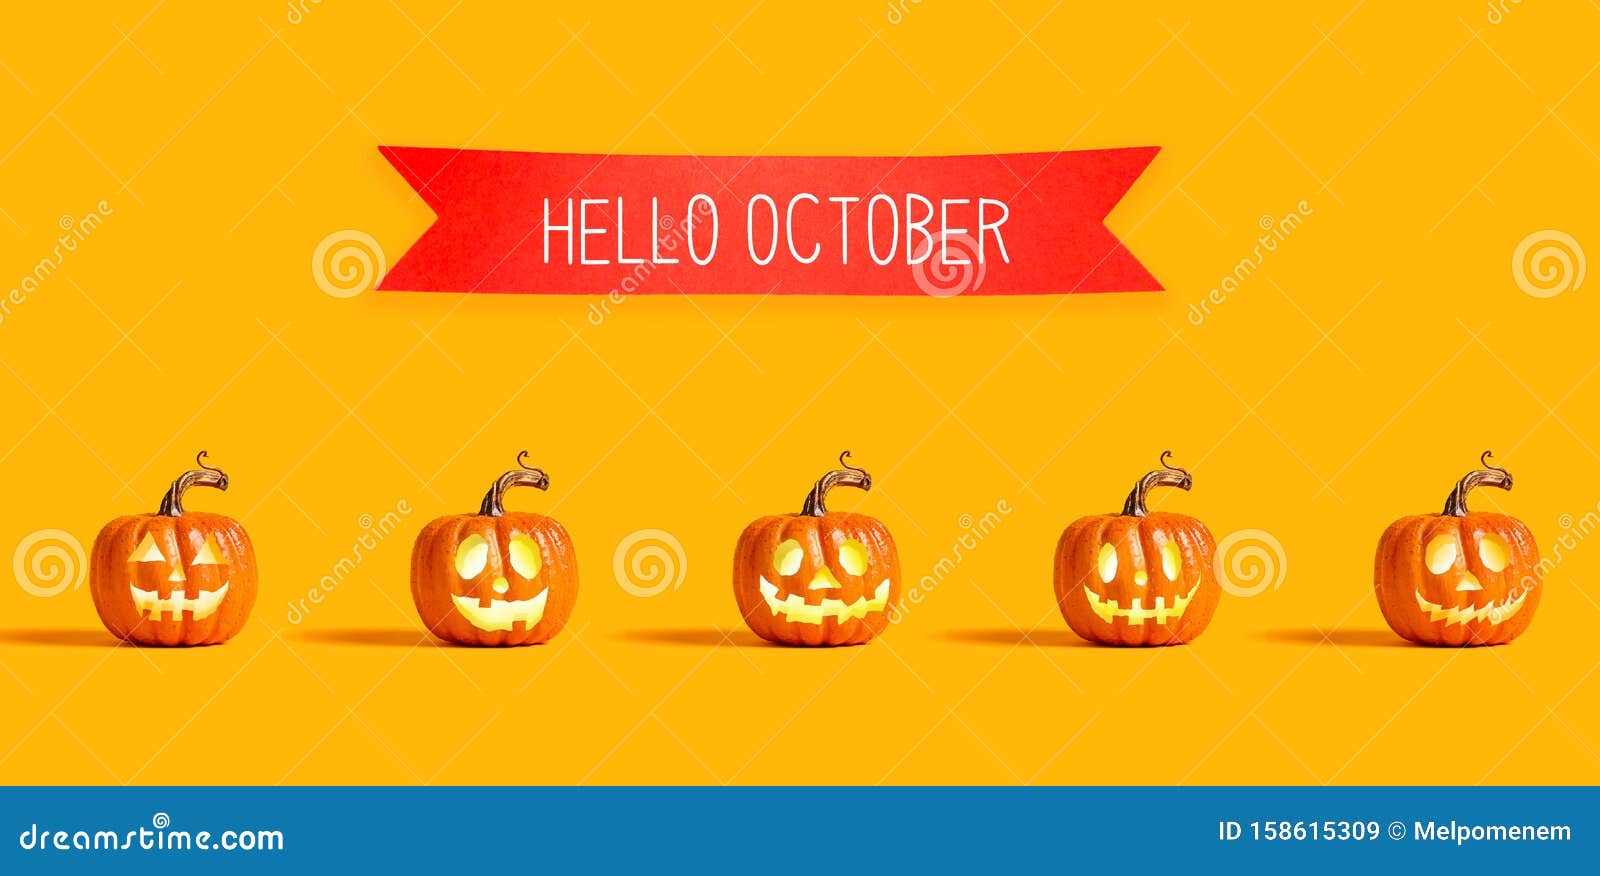 Hello October With Orange Pumpkins Stock Illustration Illustration Of